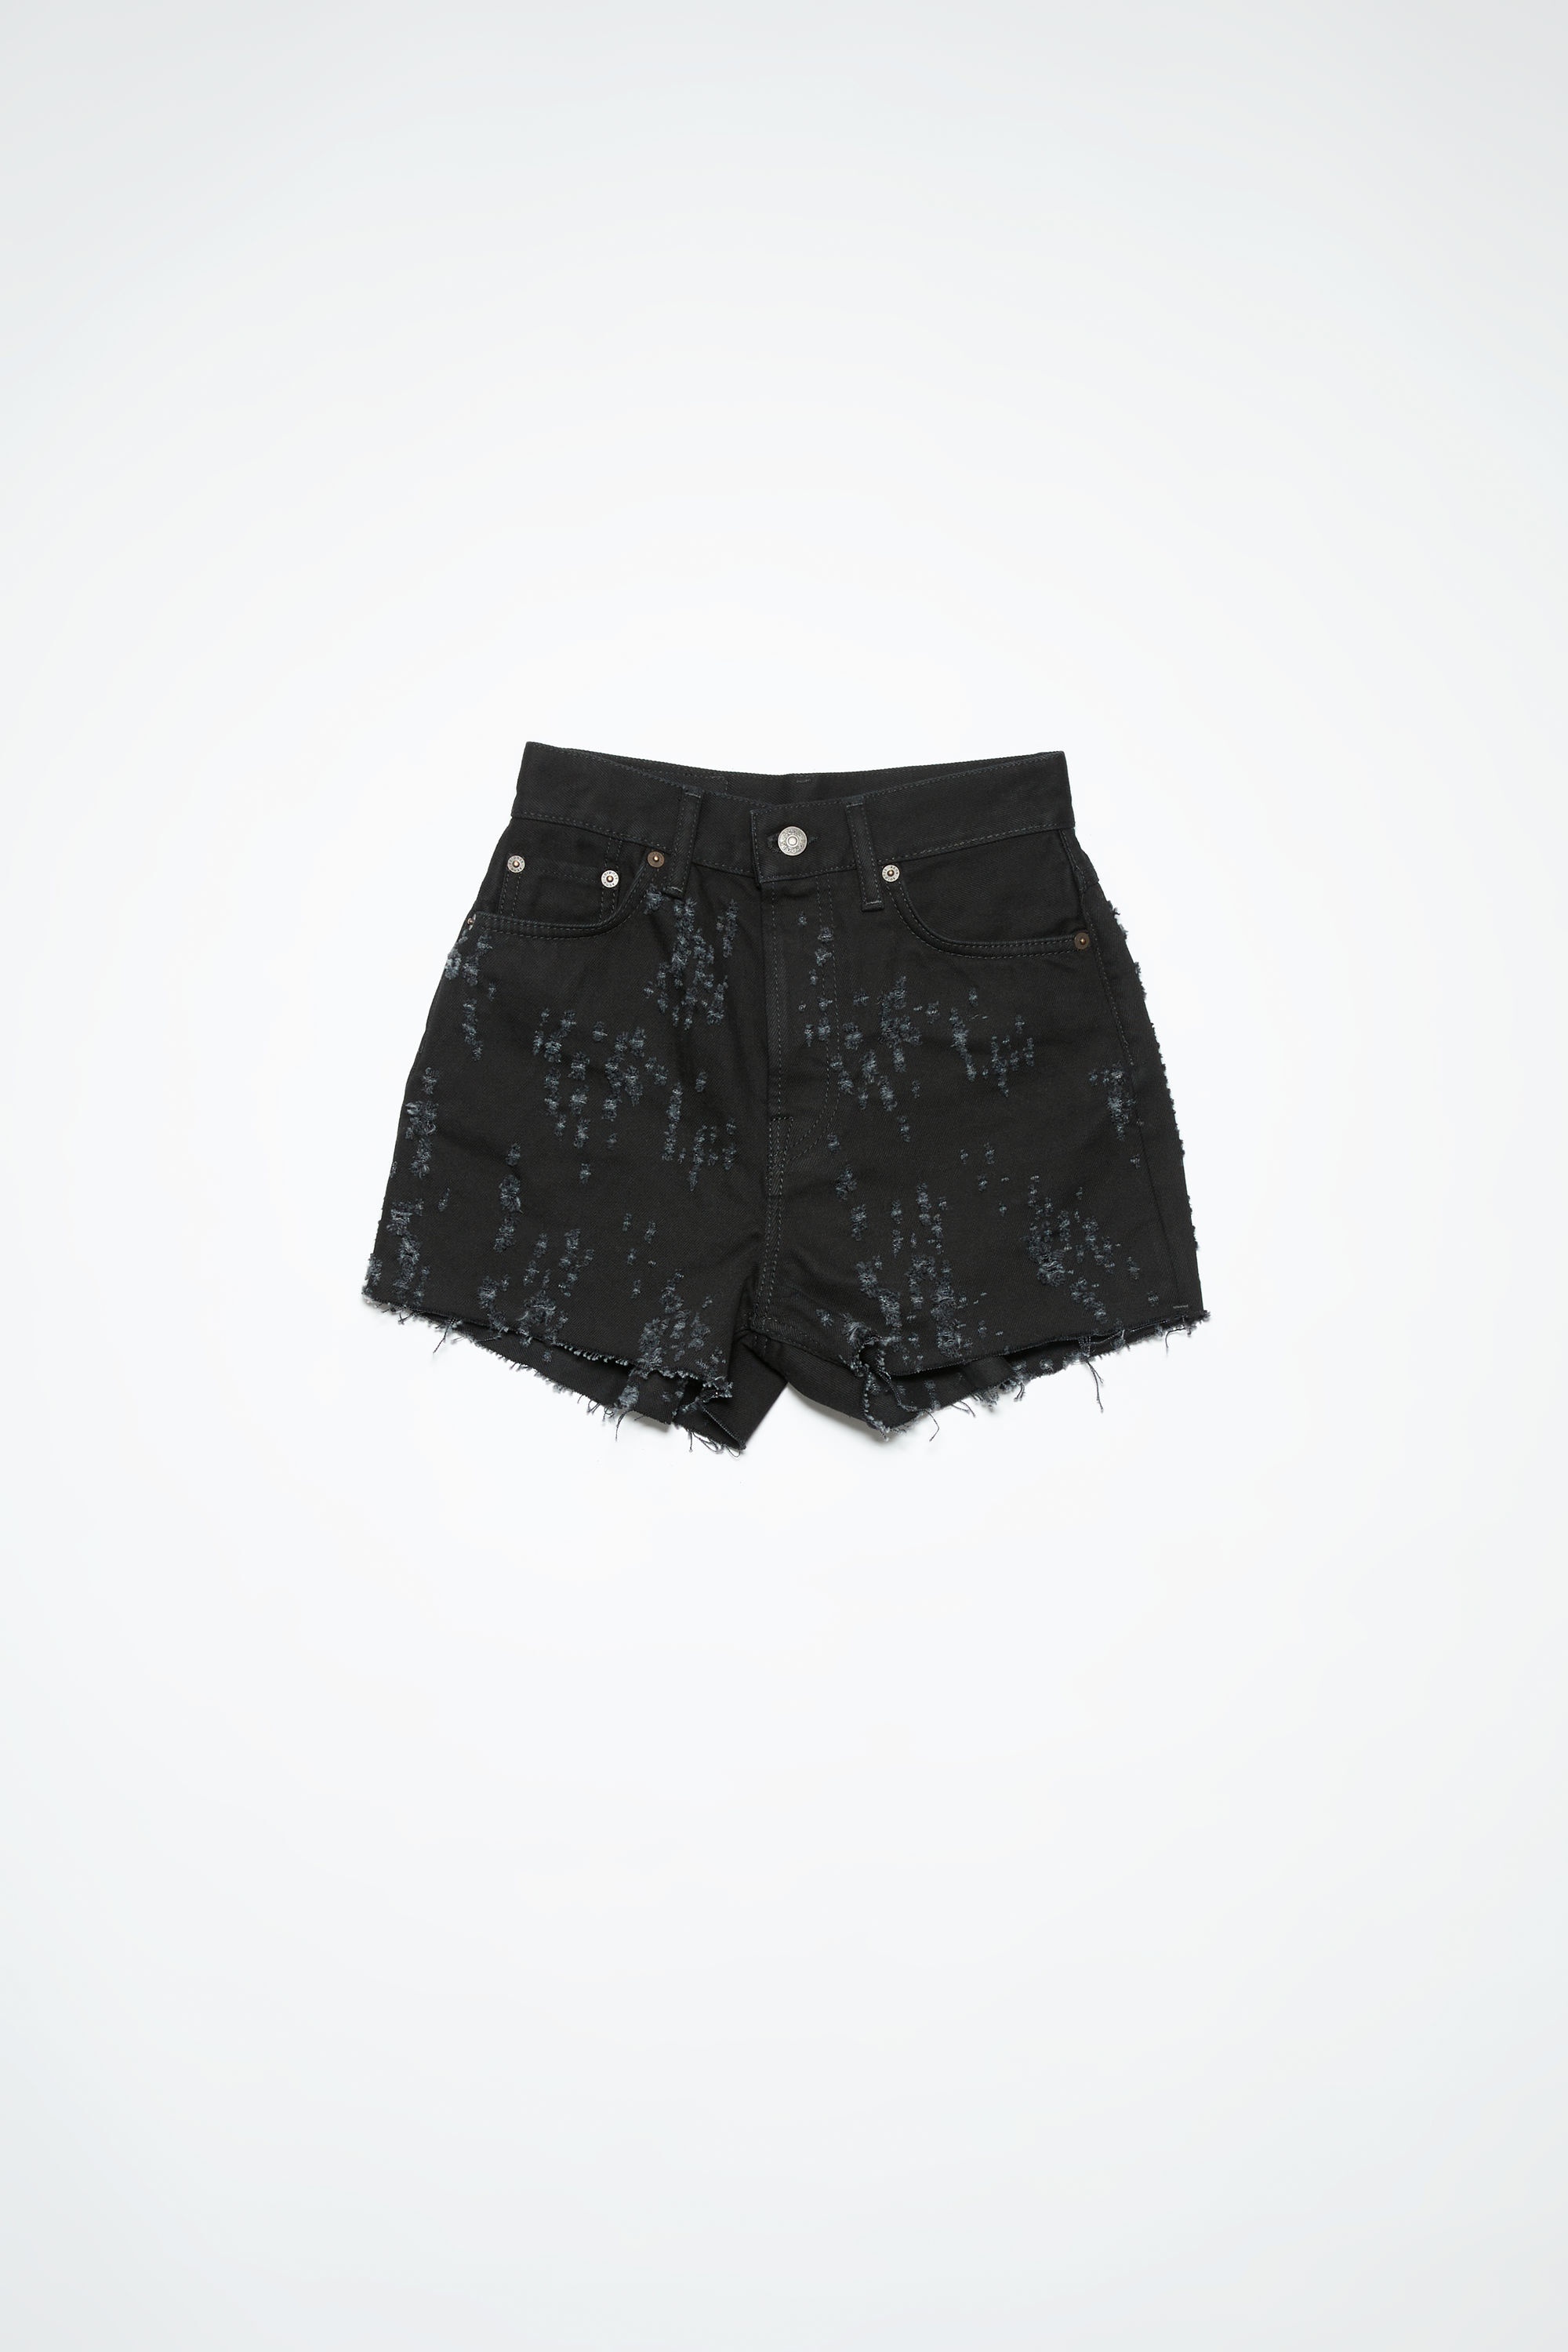 Roxx flannel checked shorts in green - Acne Studios